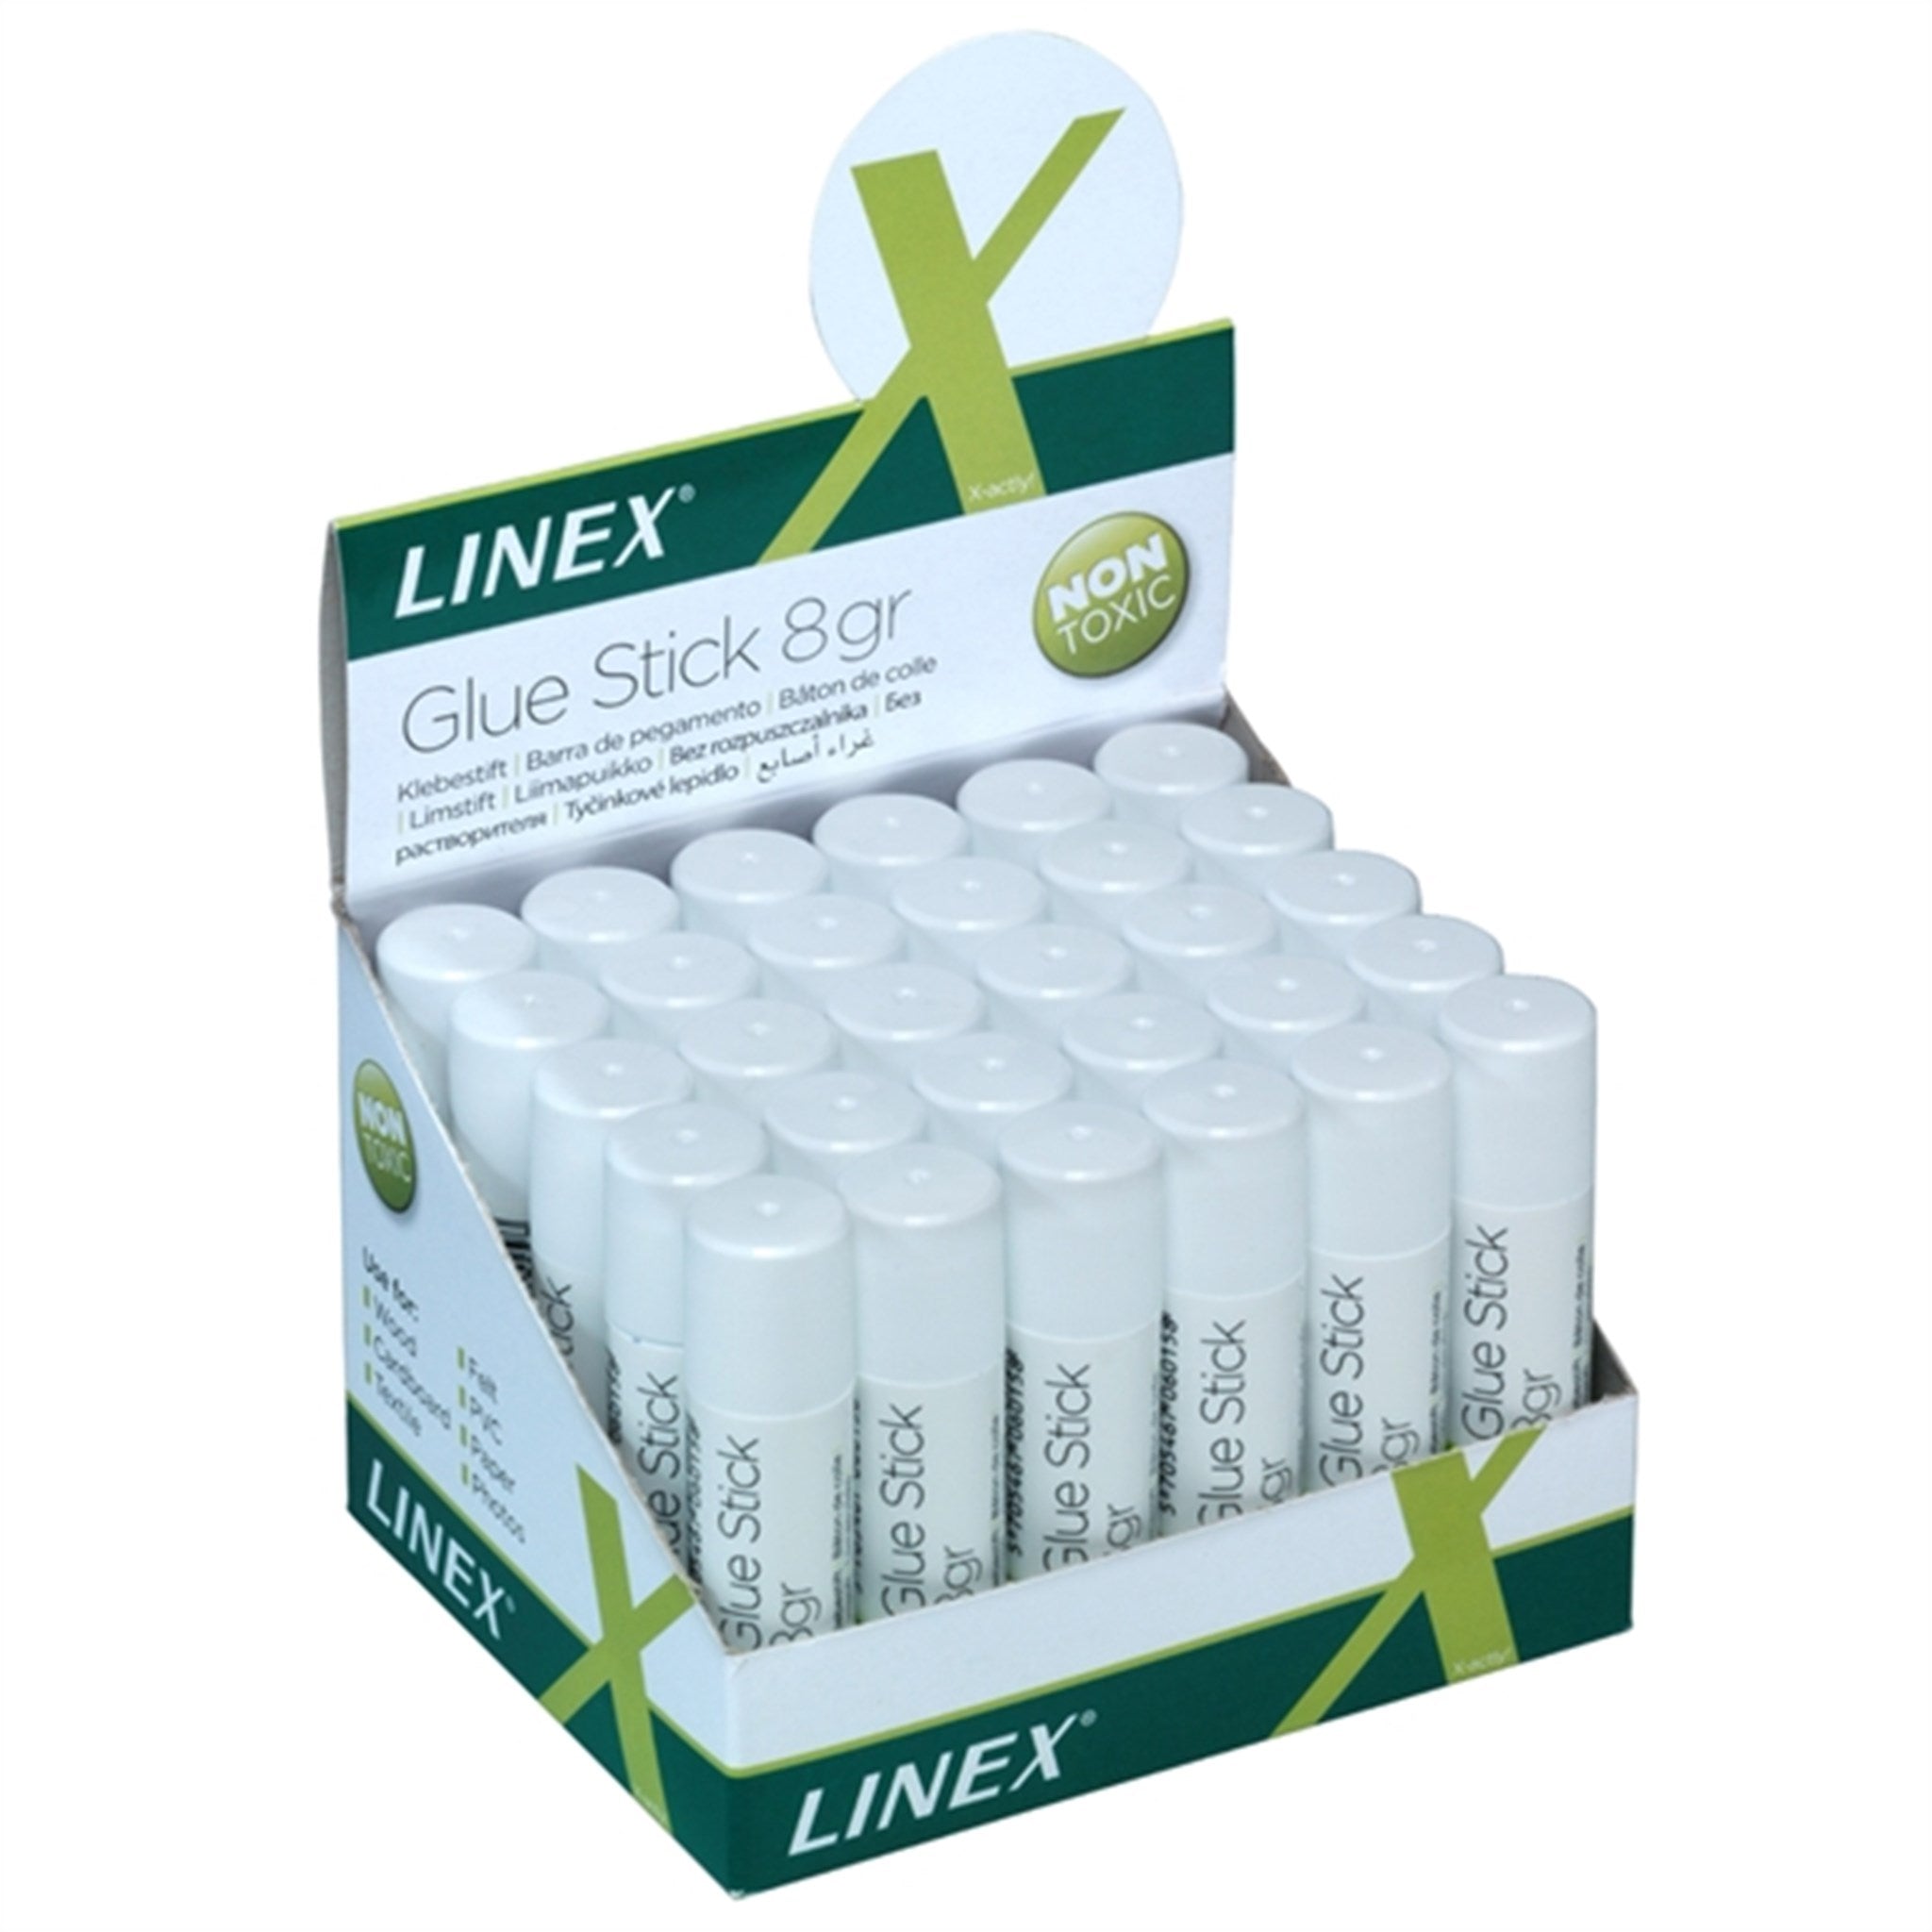 Linex Glue stick 8g